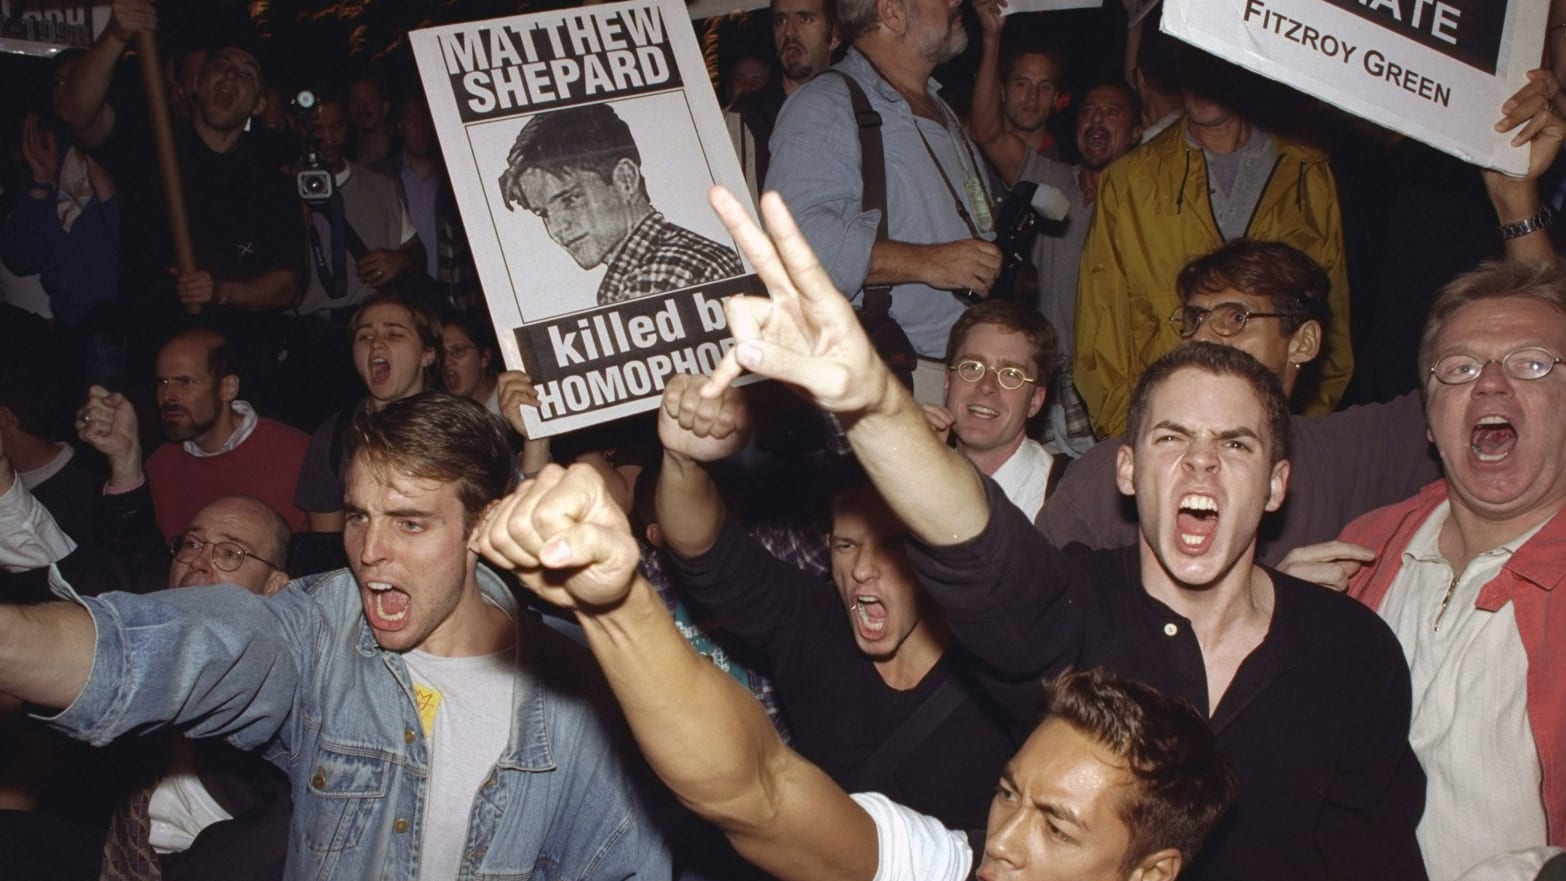 Demonstrators protest the killing of Matthew Shepard